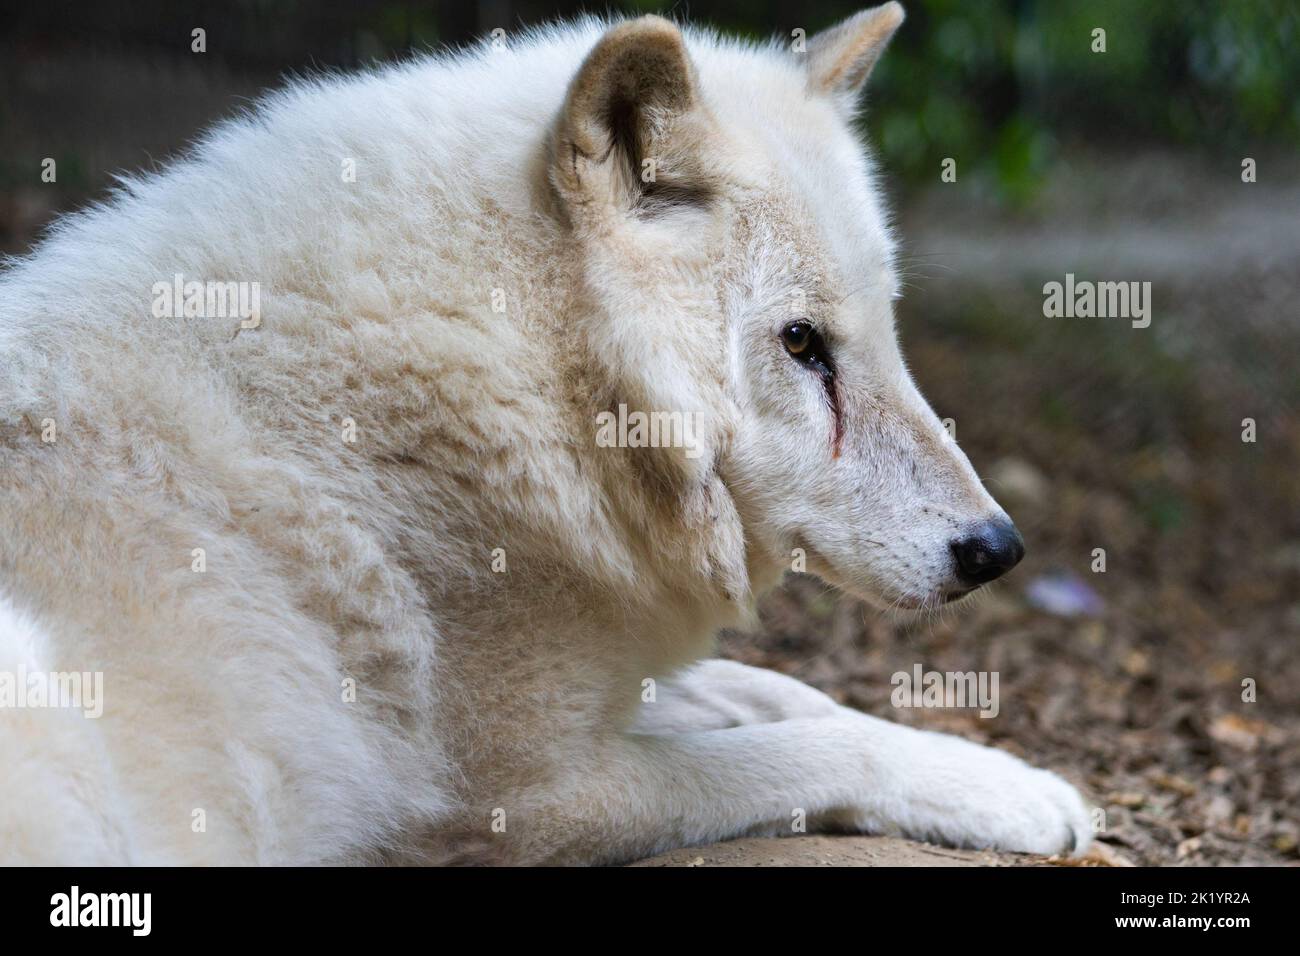 A closeup portrait of a beautiful white wolf sitting on a ground Stock Photo